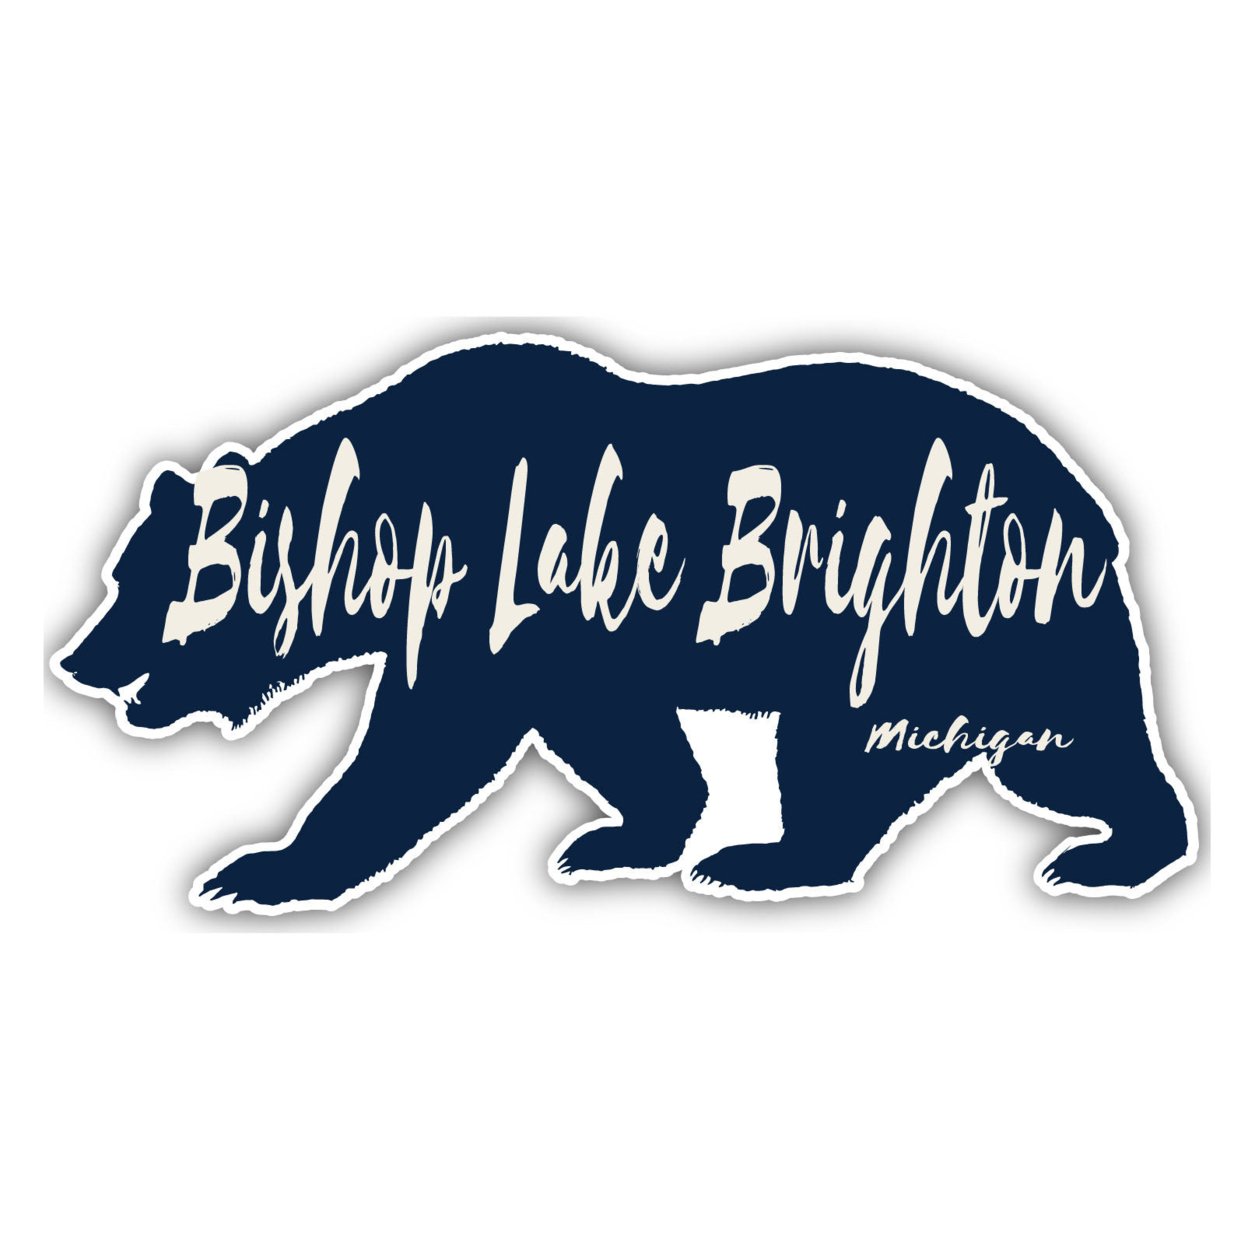 Bishop Lake Brighton Michigan Souvenir Decorative Stickers (Choose Theme And Size) - Single Unit, 4-Inch, Bear